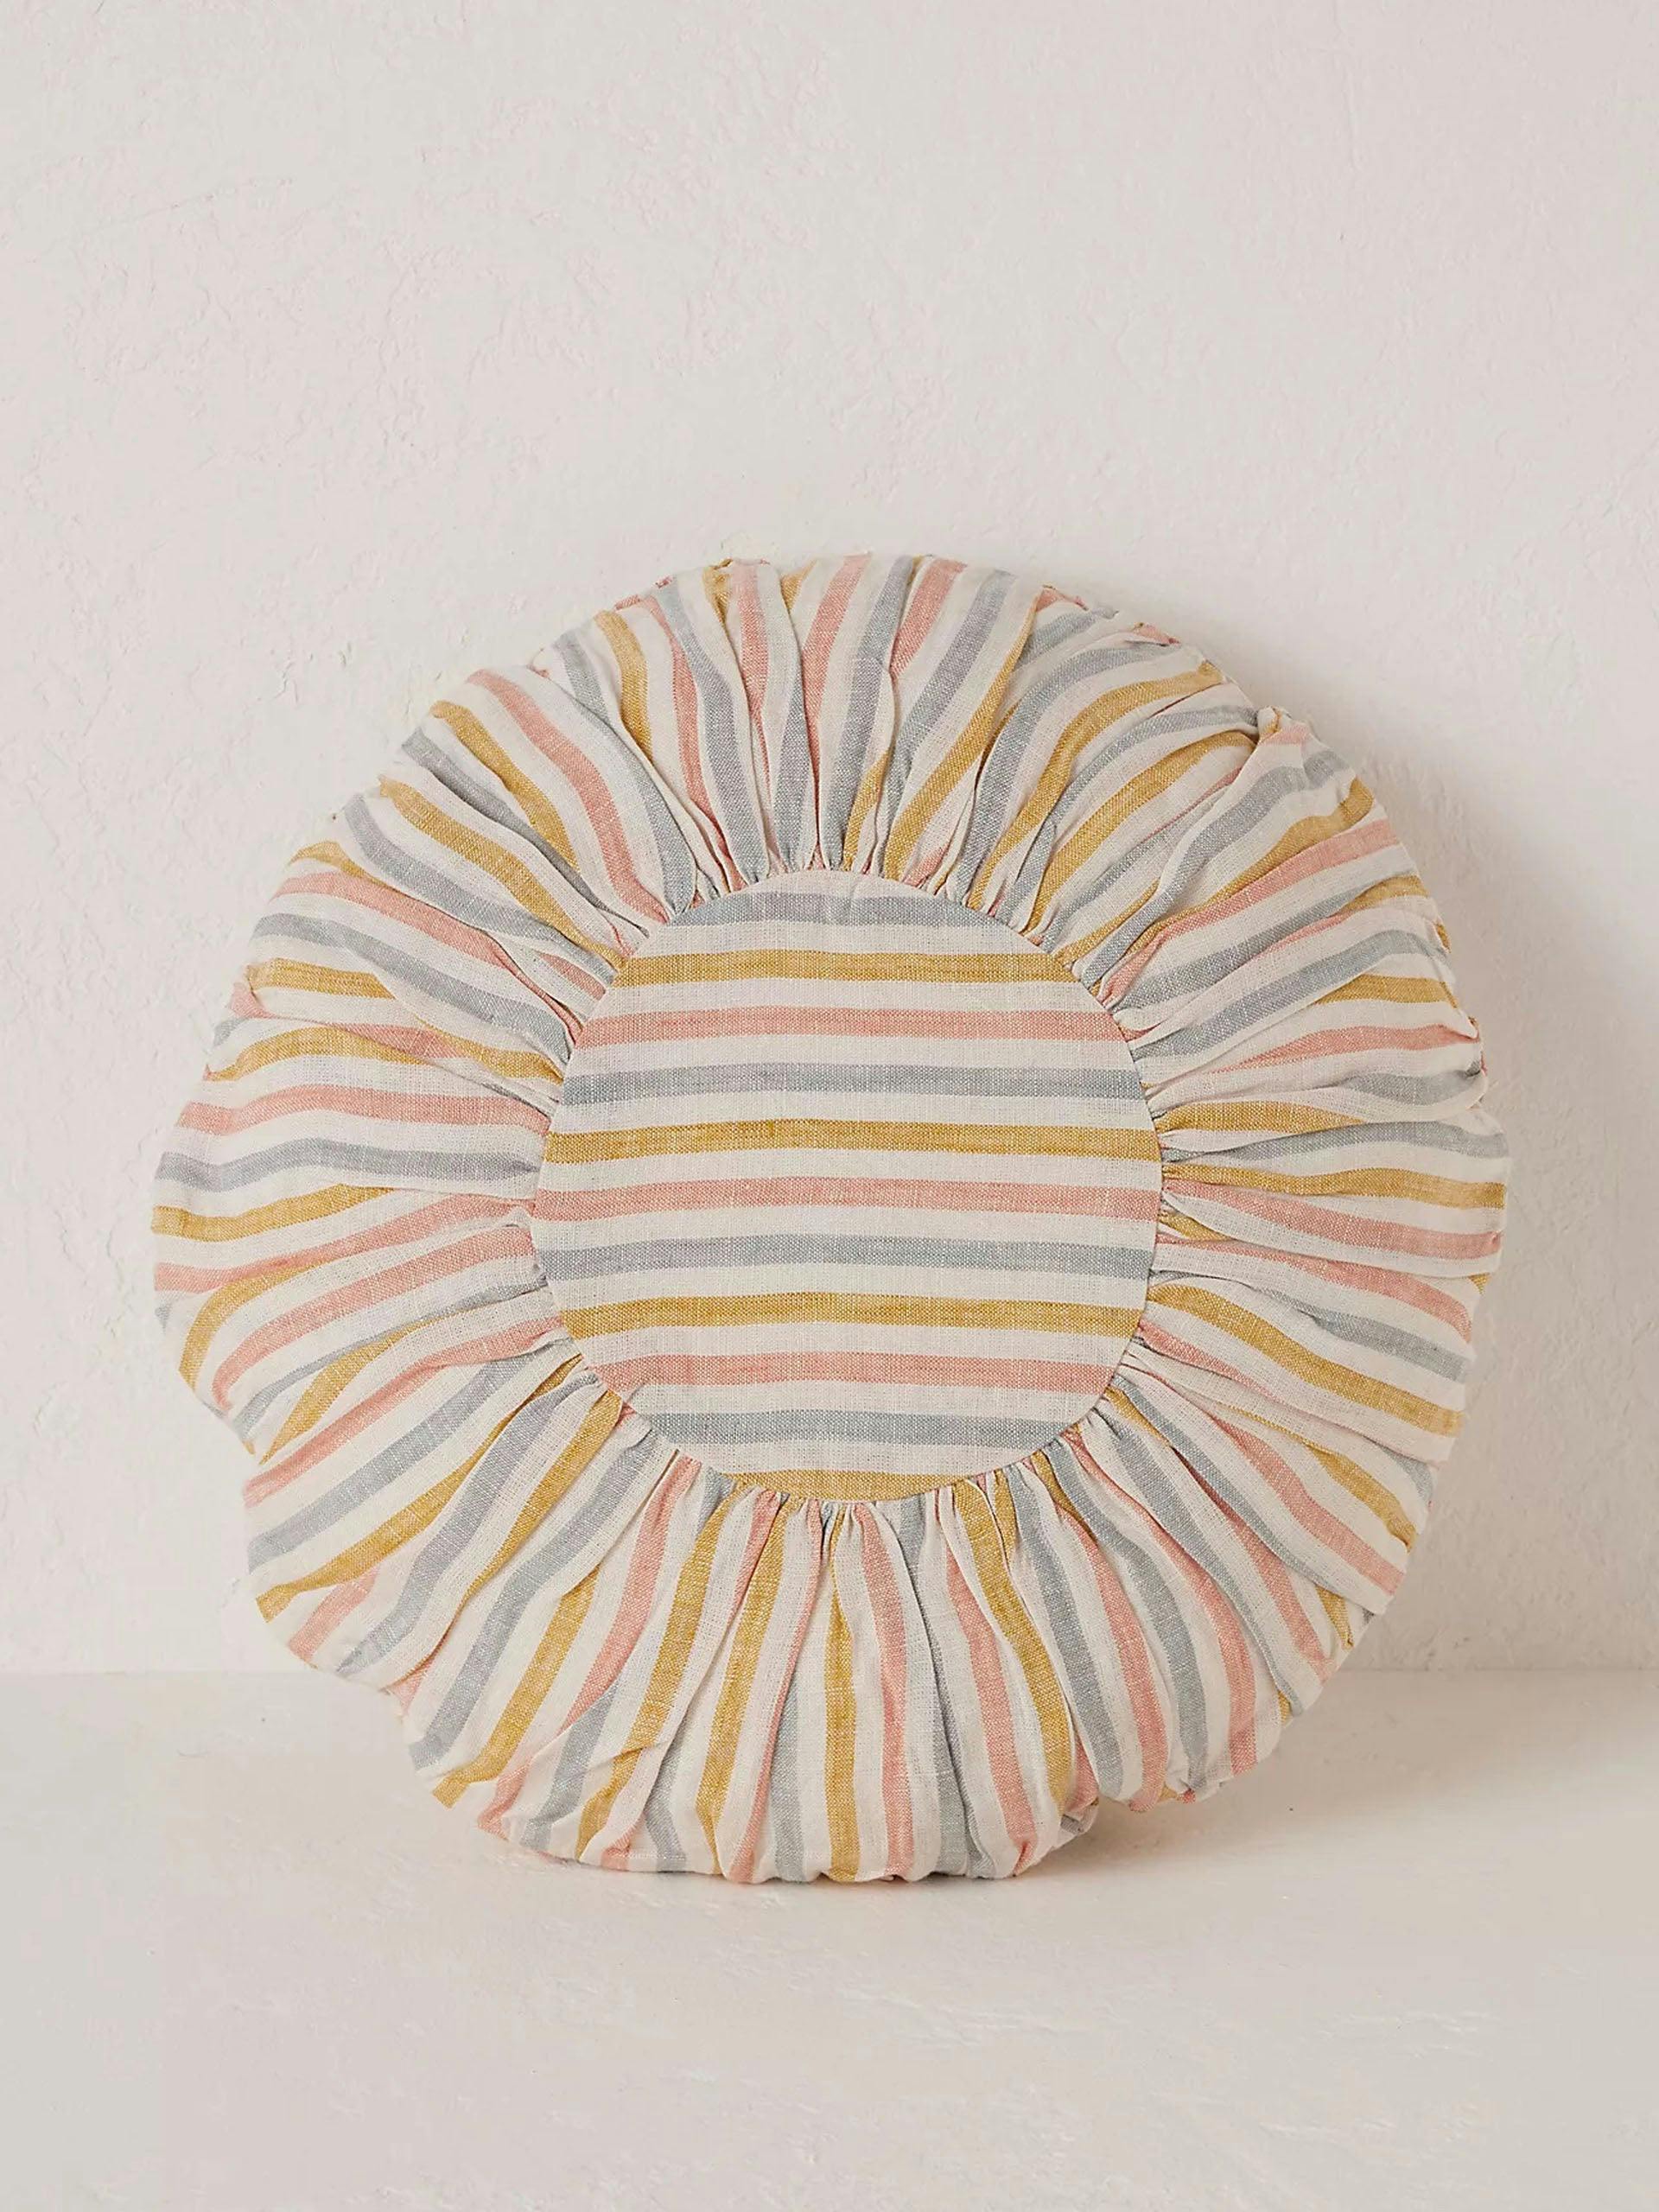 Striped round cushion